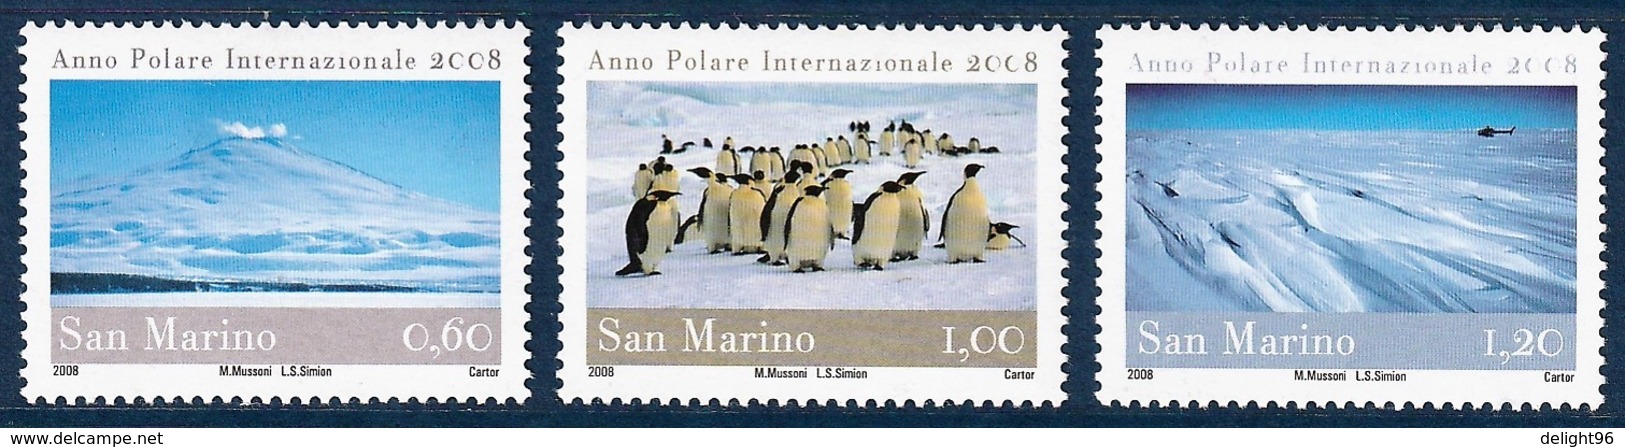 2008 San Marino International Polar Year: Penguins, Antarctic Landscapes Set (** / MNH / UMM) - International Polar Year